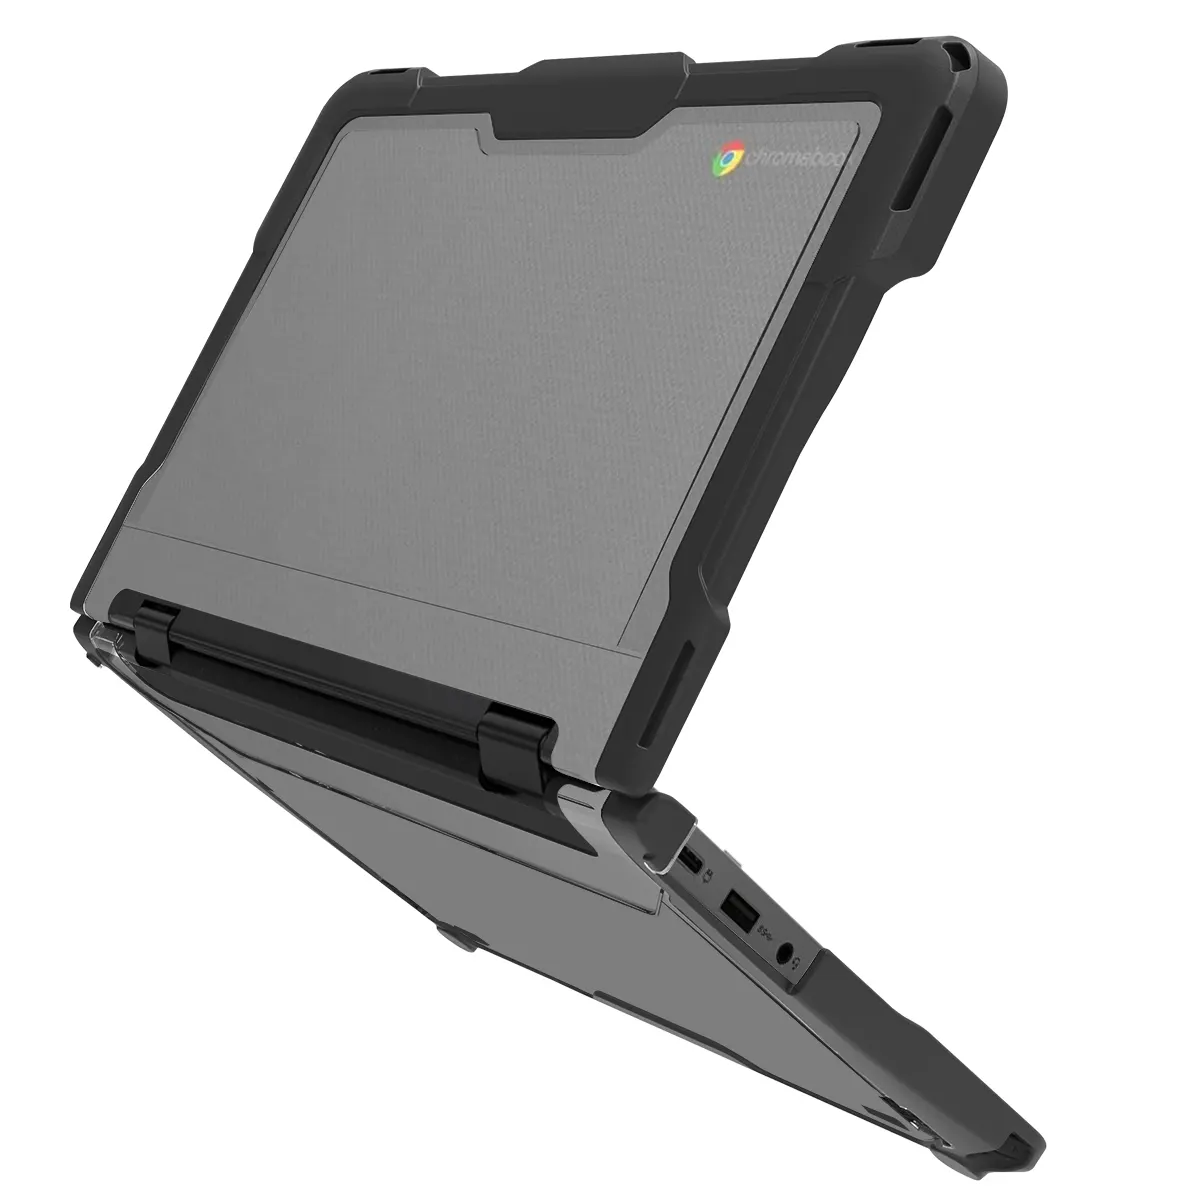 ODM casing penutup Laptop kustom lengan cangkang keras pelindung kasar OEM untuk HP Chromebook x360 11 G4 EE 11.6 "2 in 1 Chromebook